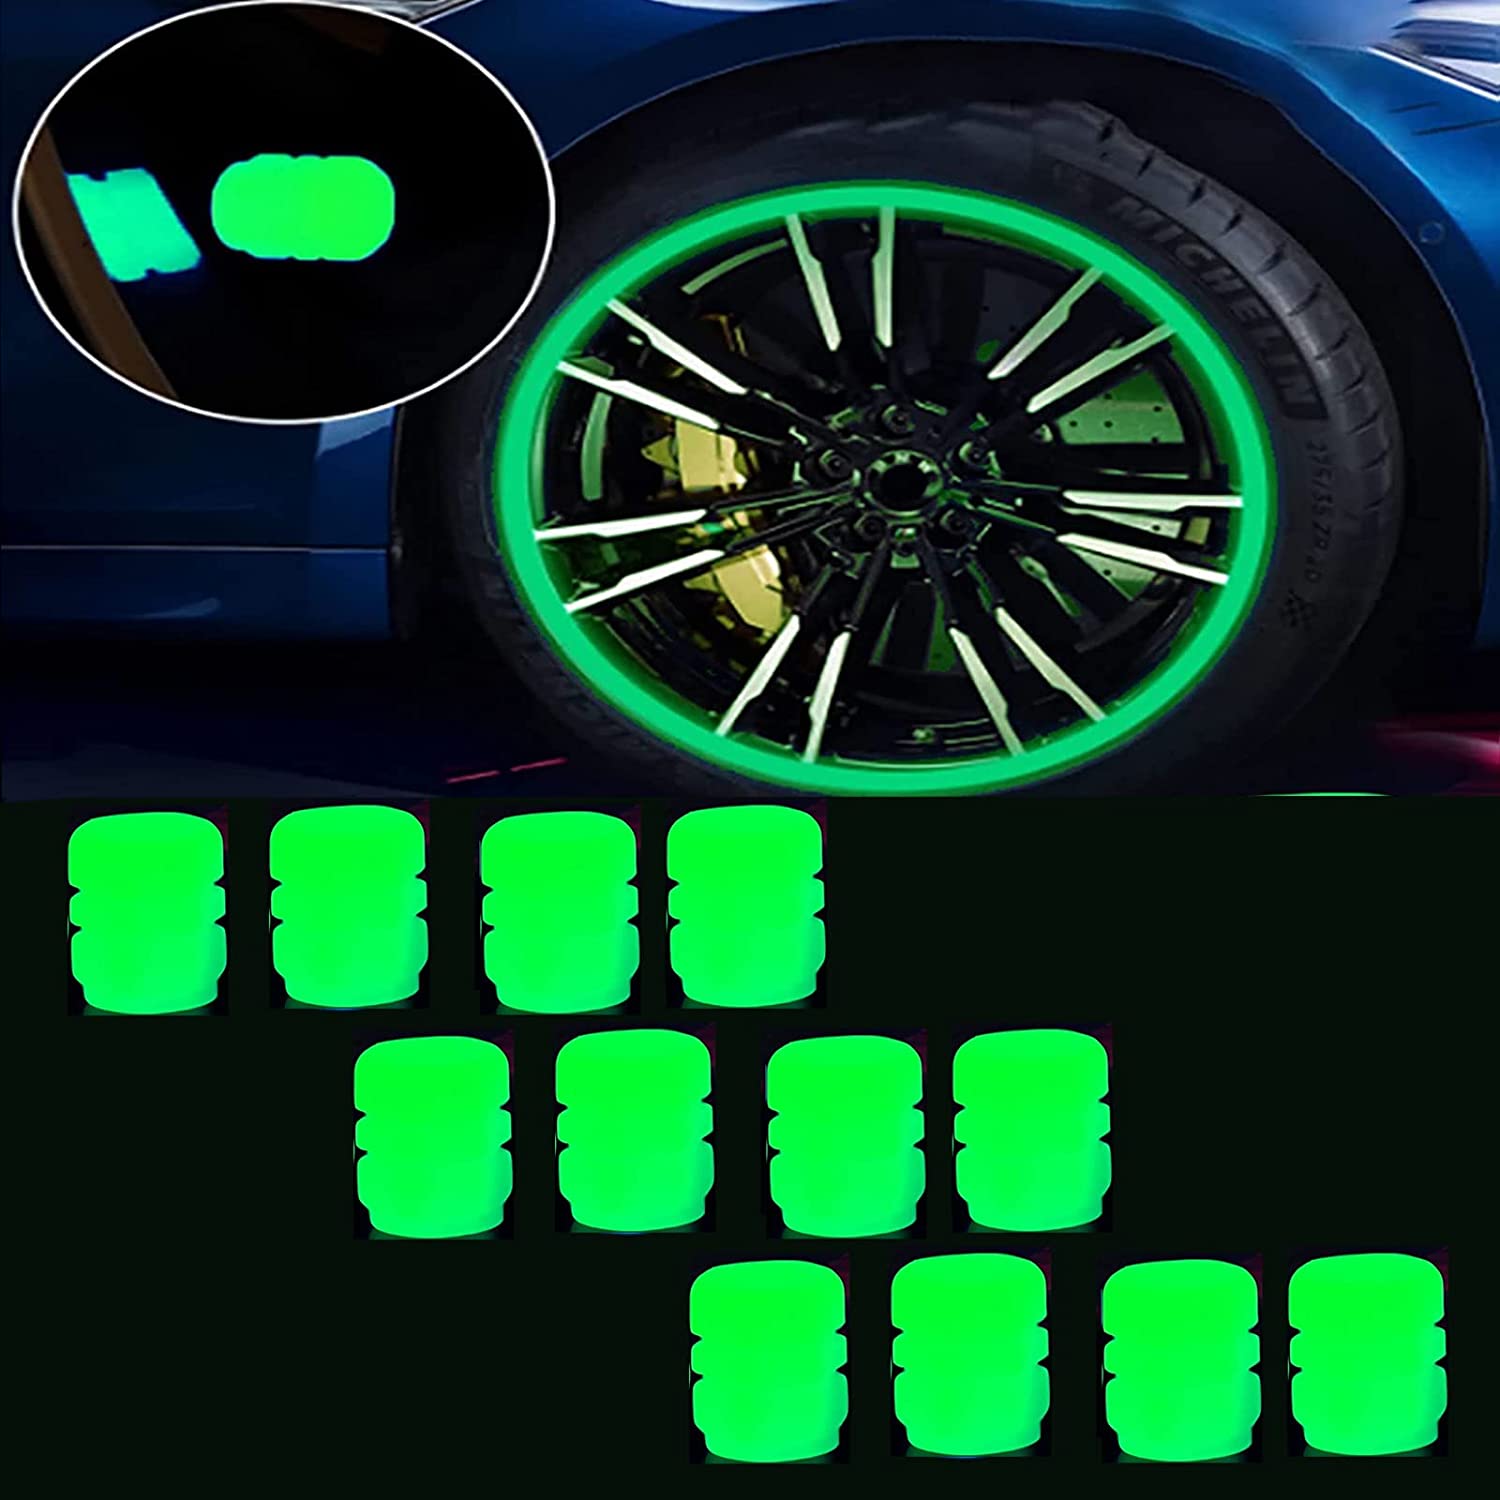 3/12Pcs Universal Fluorescent Car Tire Valve Caps,Luminous Tire Valve Stem  Caps Glow in The Dark Tire Valve Caps,Universal Tire Valve Stem Covers  Accessories for Car Truck SUV Motorcycles Bike